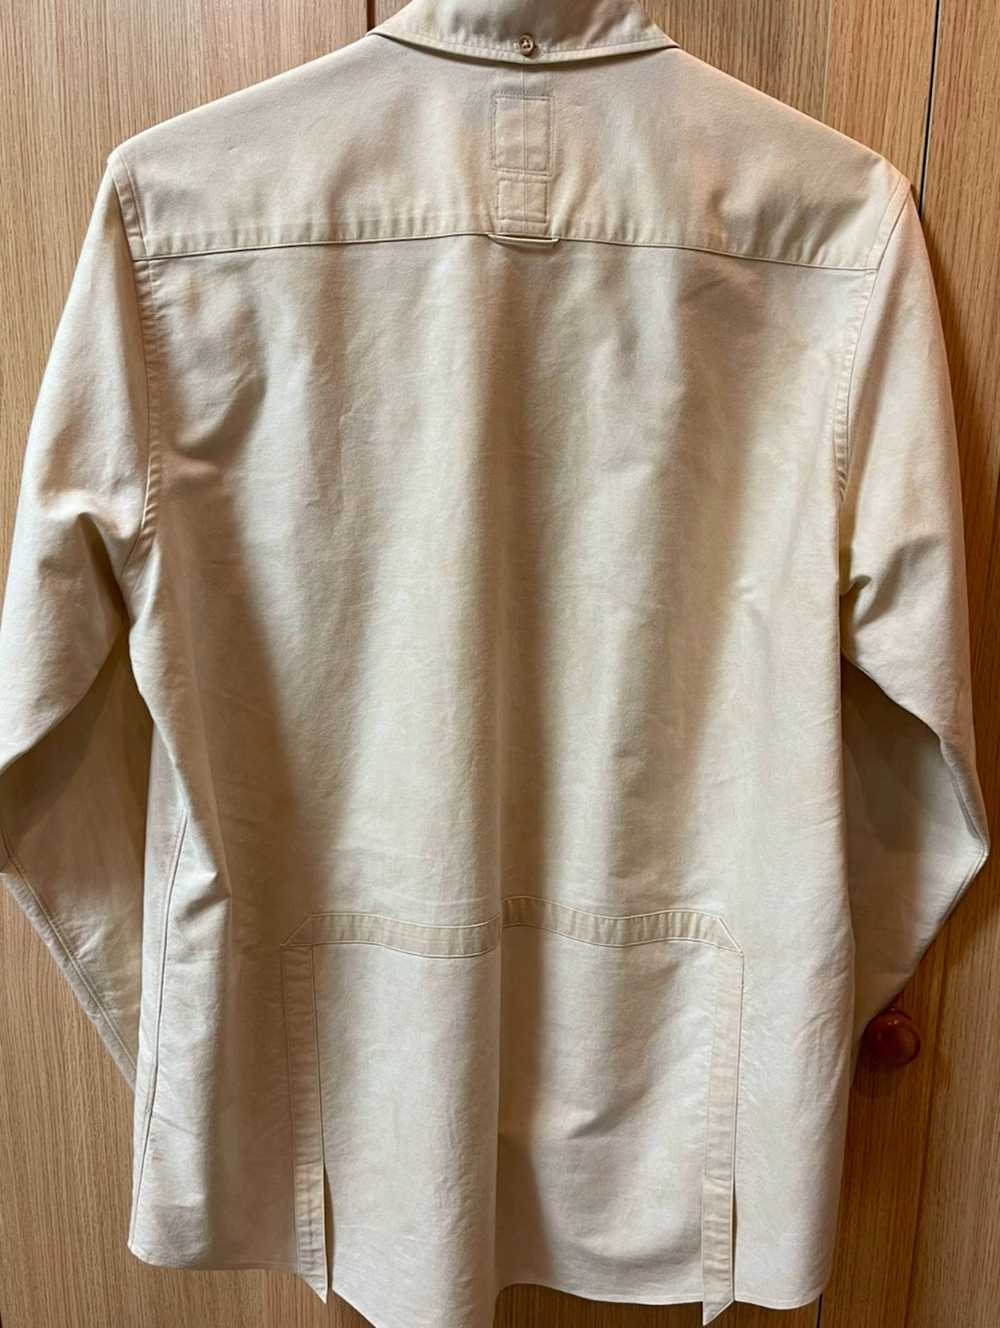 Visvim Visvim Ict Mud Dyed Shirt - image 2